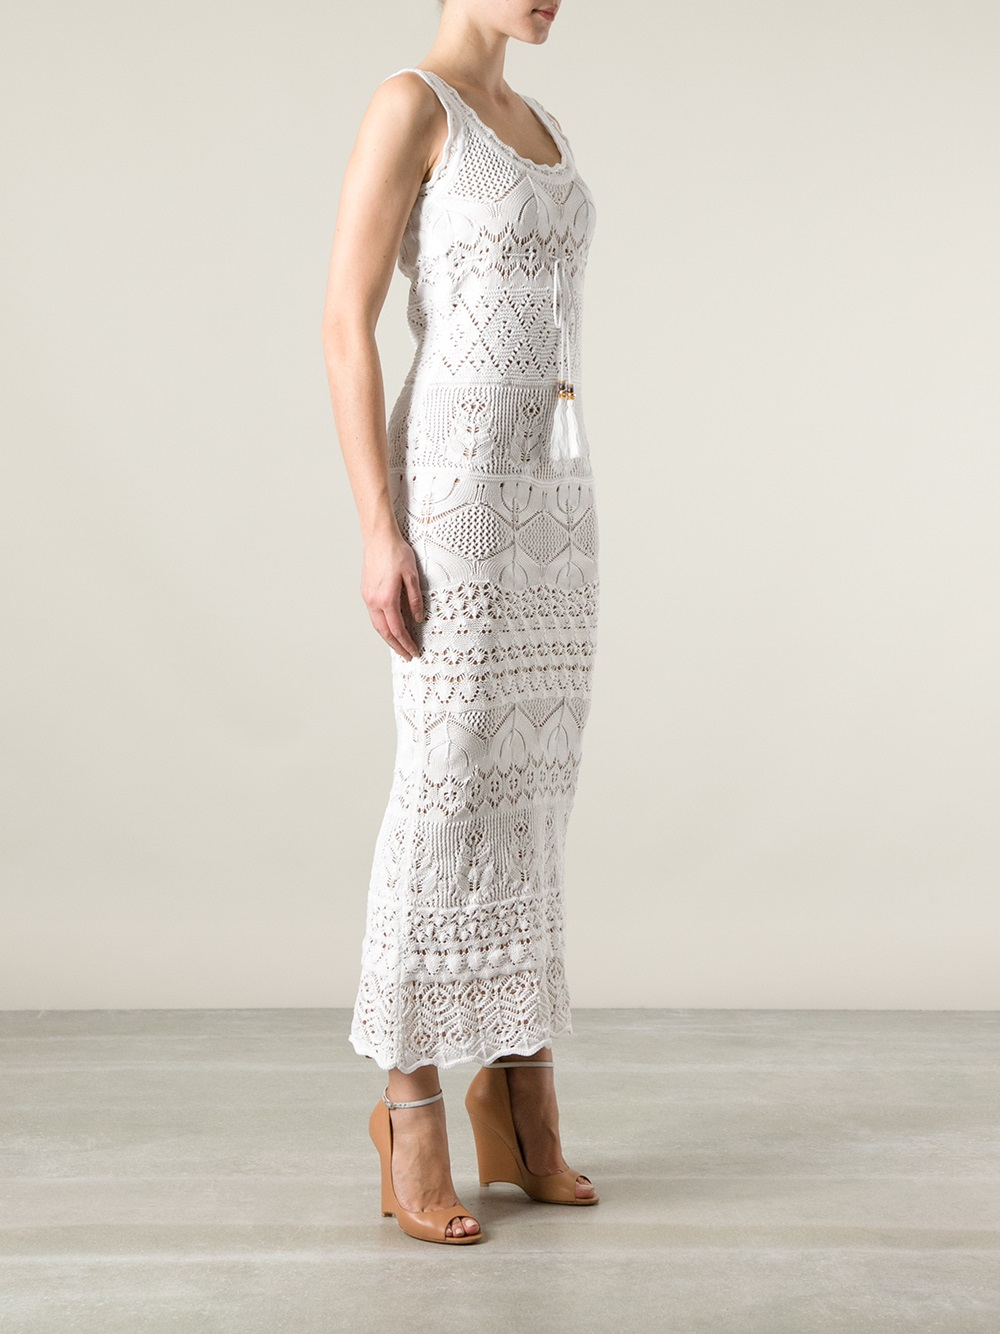 Emilio pucci Crochet Knit Dress in White | Lyst